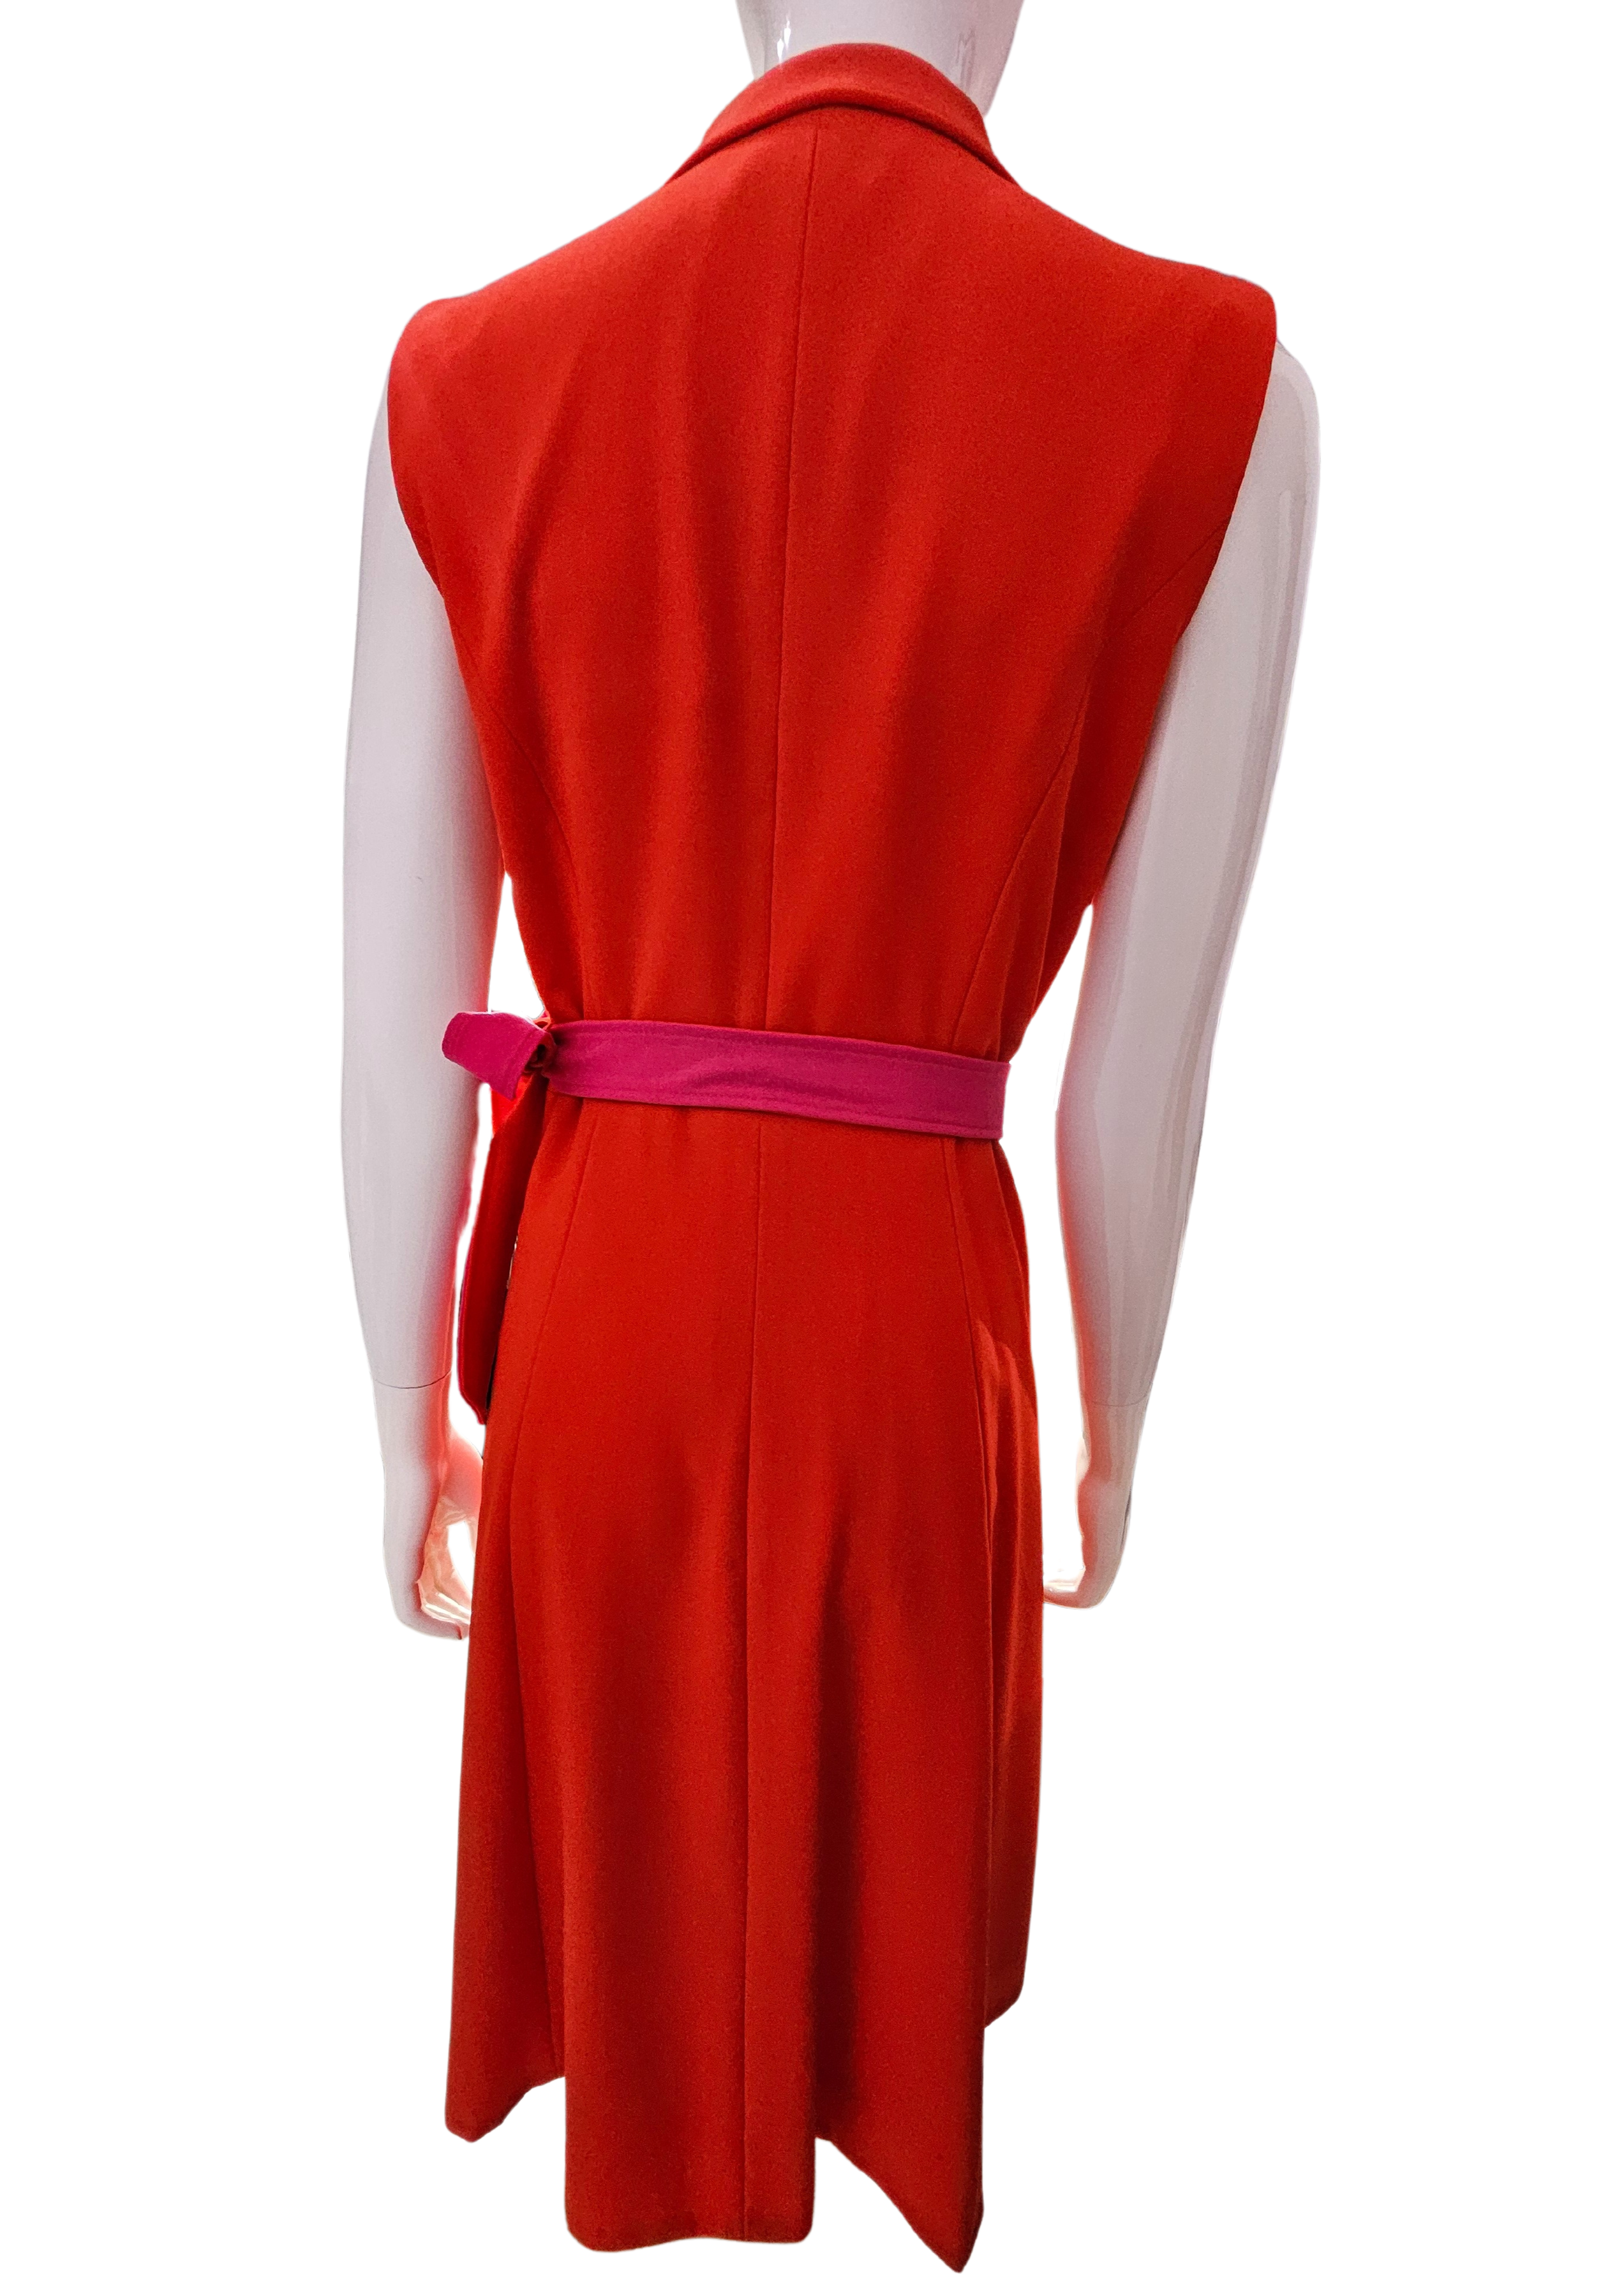 Women's Red and Fushia Dress